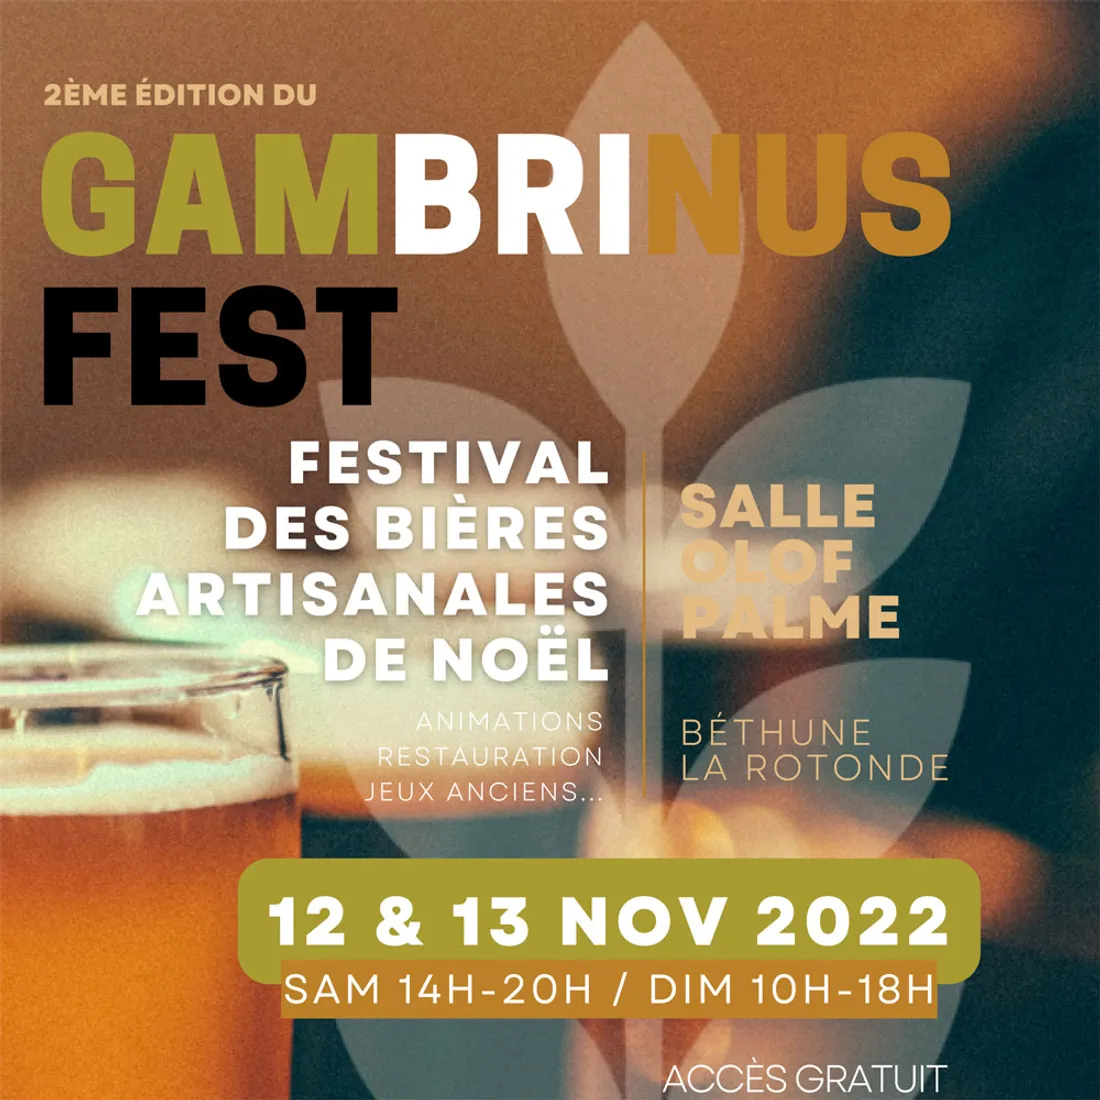 gambrinus-fest-bethune-festival-biere-2022.jpg (191 KB)